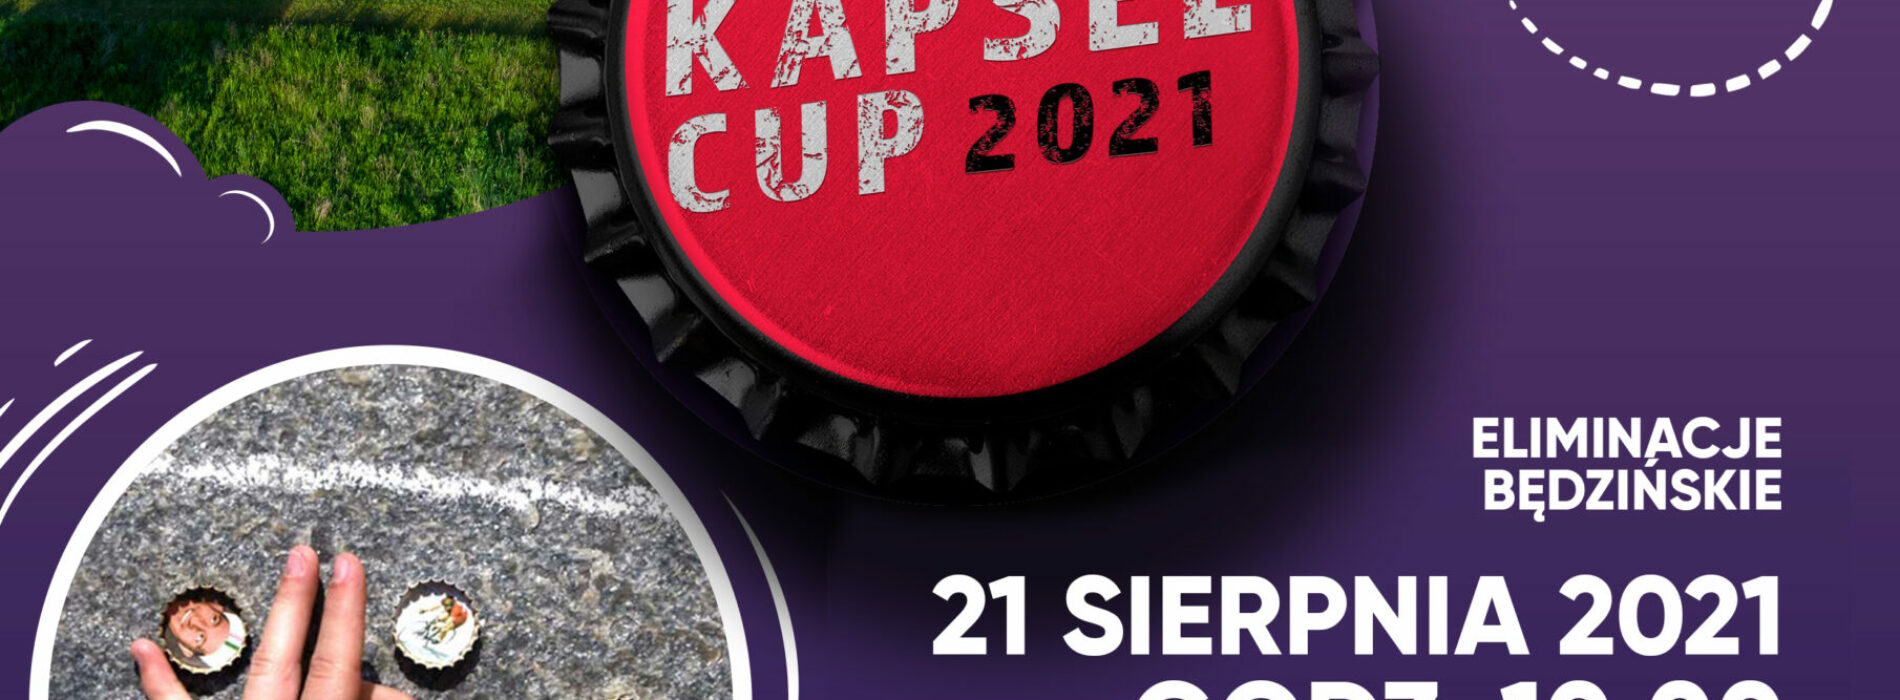 Kapsel Cup 2021